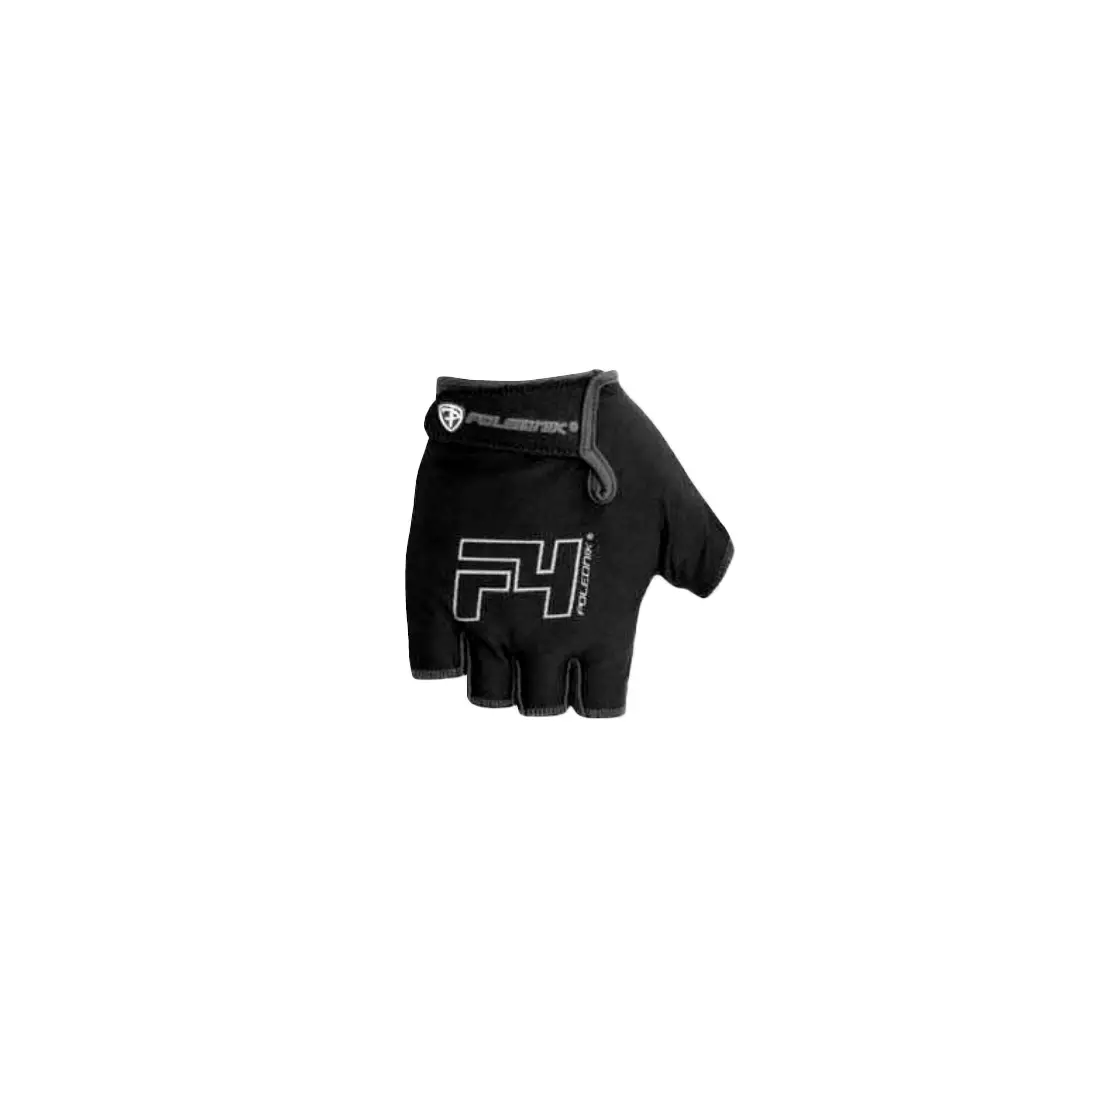 POLEDNIK F4 NEW14 cycling gloves, black